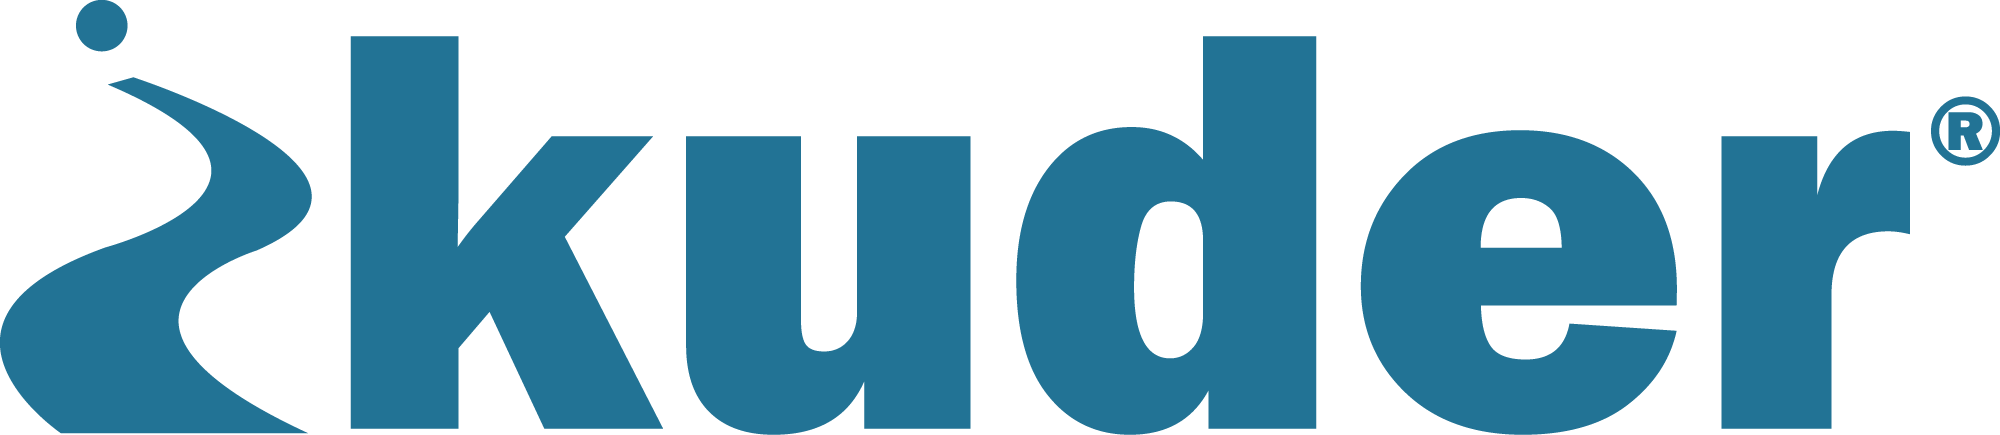 Kuder, Inc. Company Logo